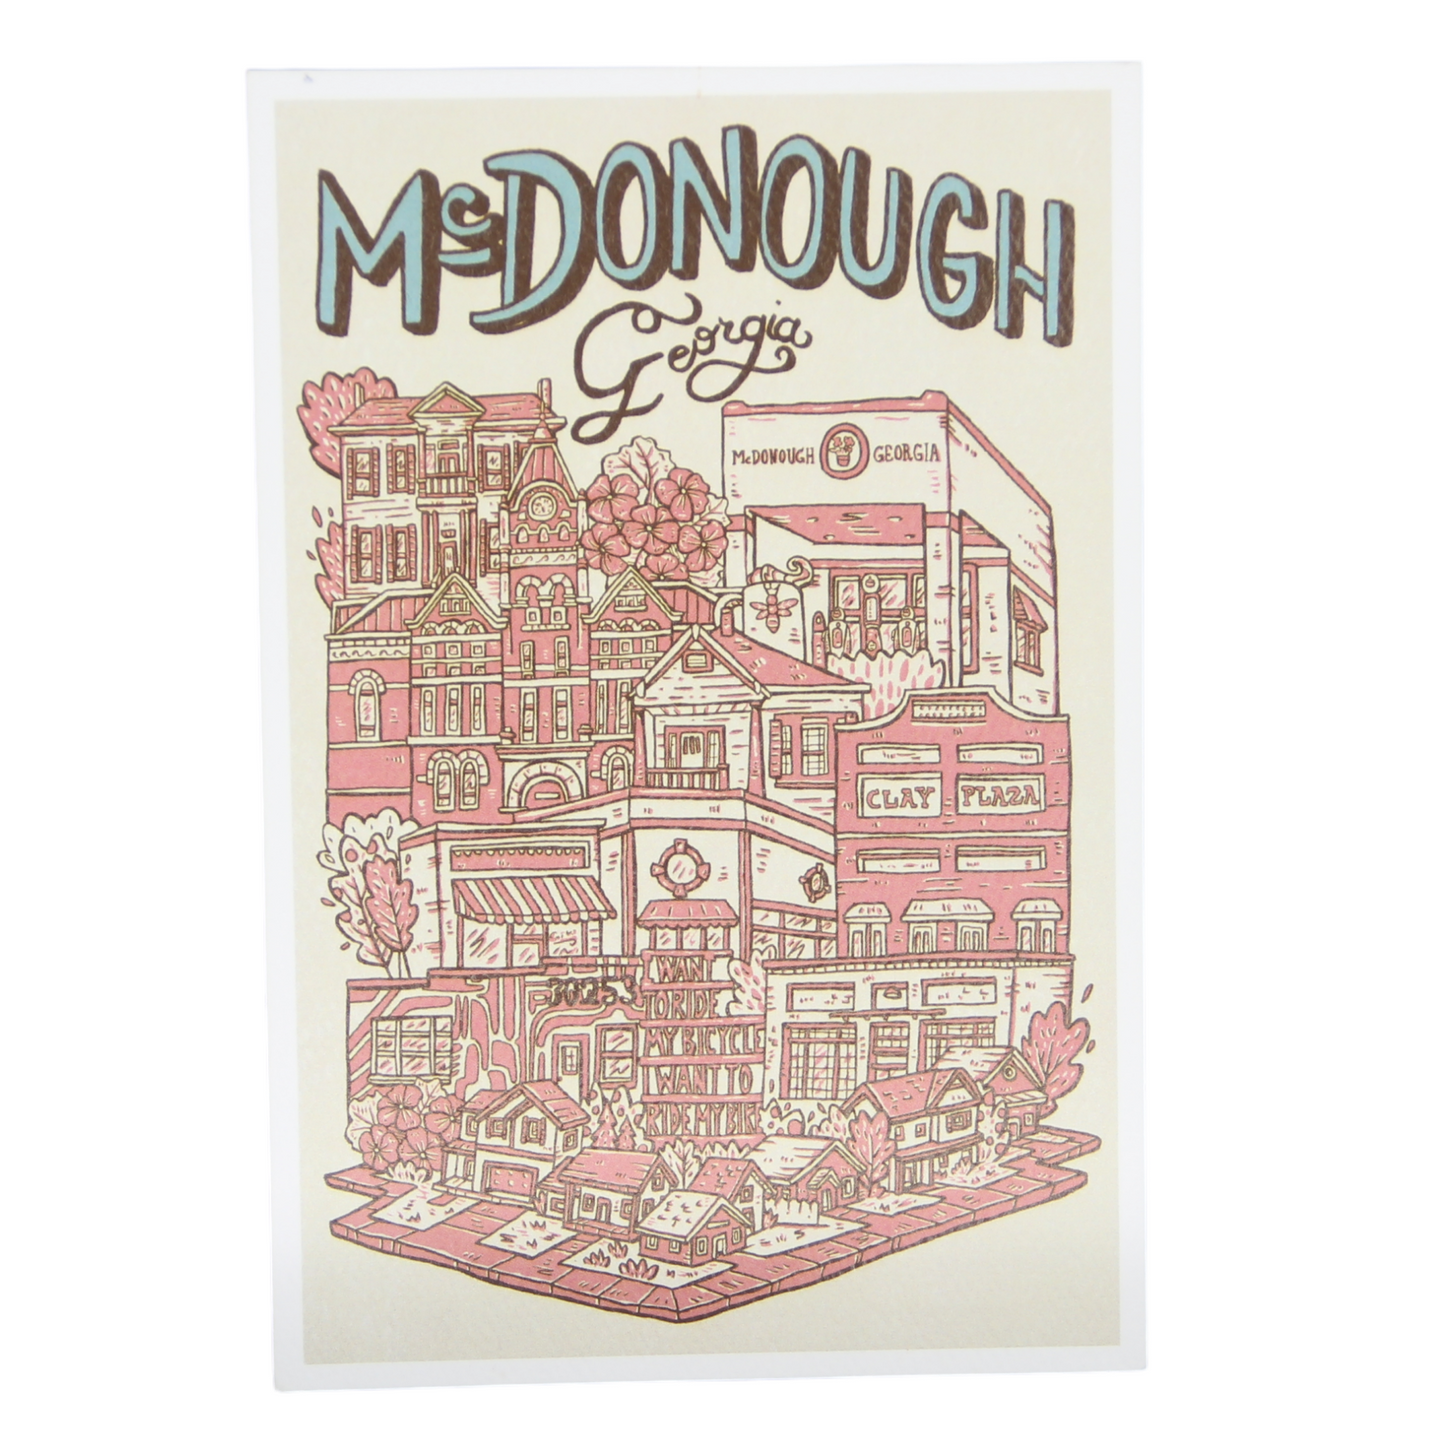 McDonough Neighborhood Prints